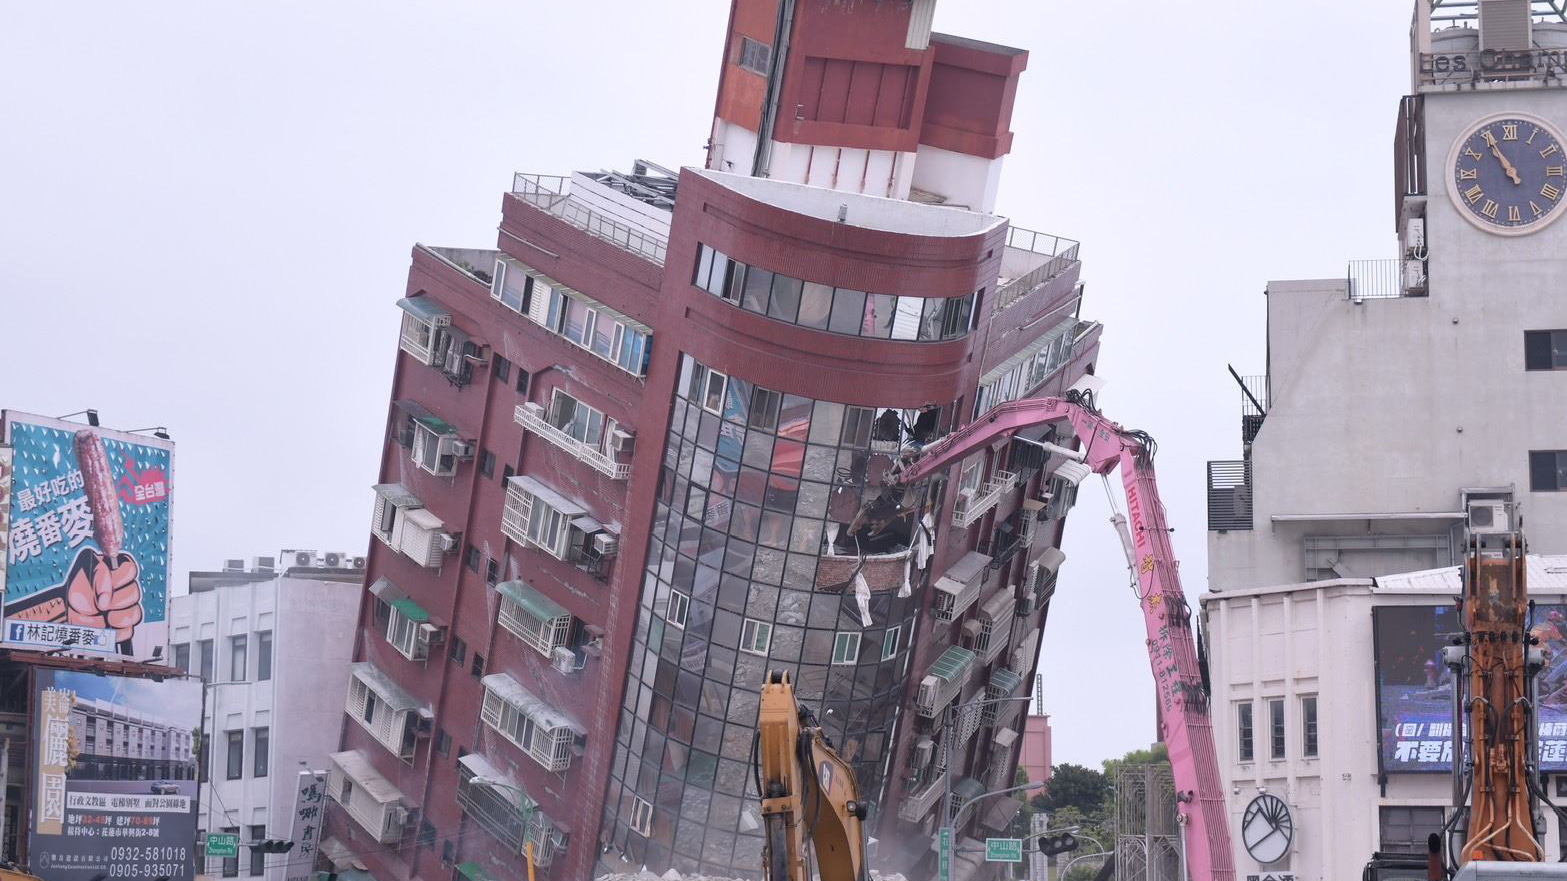 Earthquake response burnishes Taiwan’s international reputation